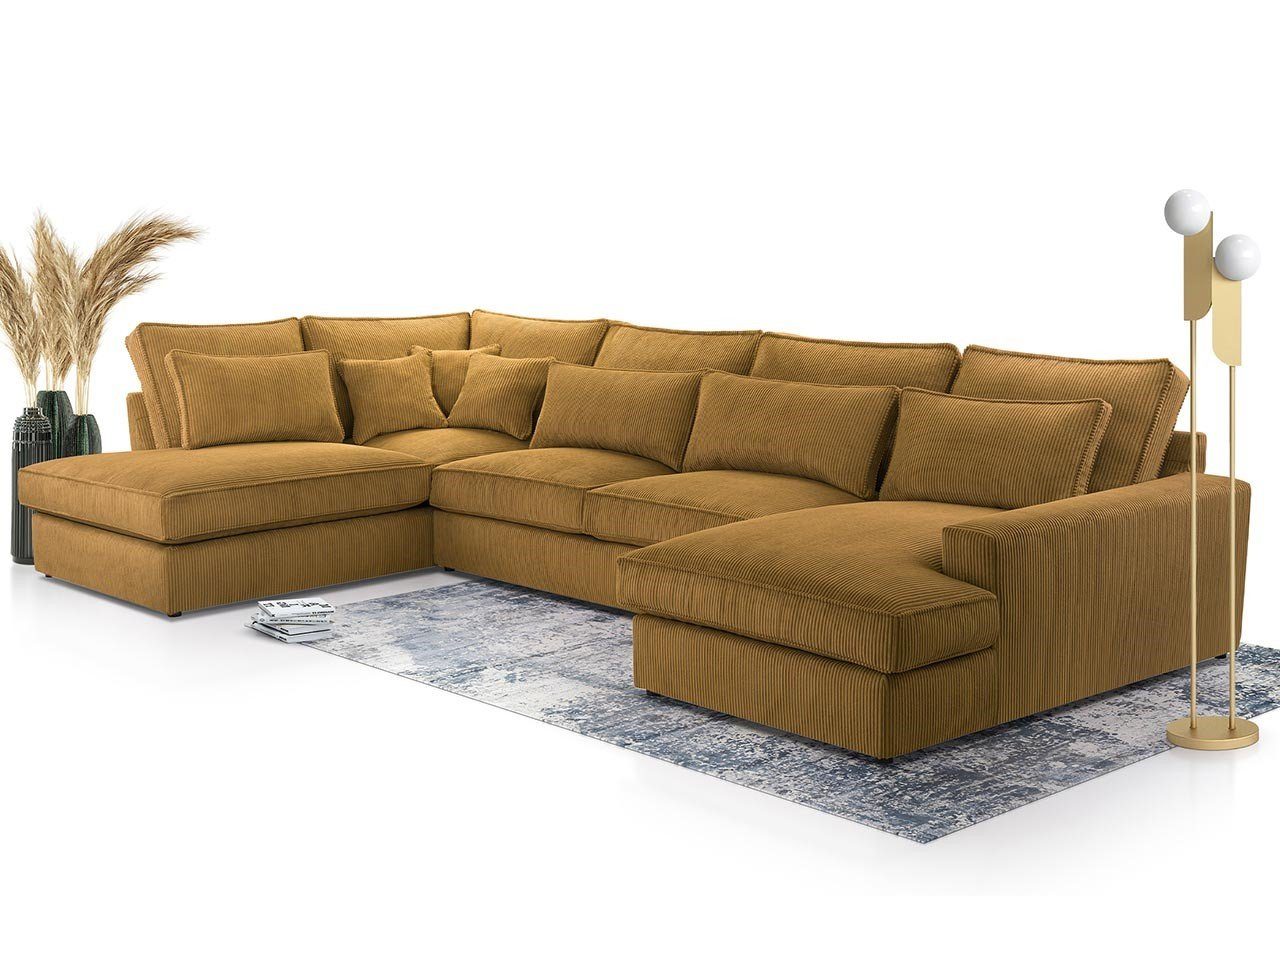 MKS MÖBEL Ecksofa CANES U, U - Form Couch, lose Kissen, modern Design Orange Lincoln